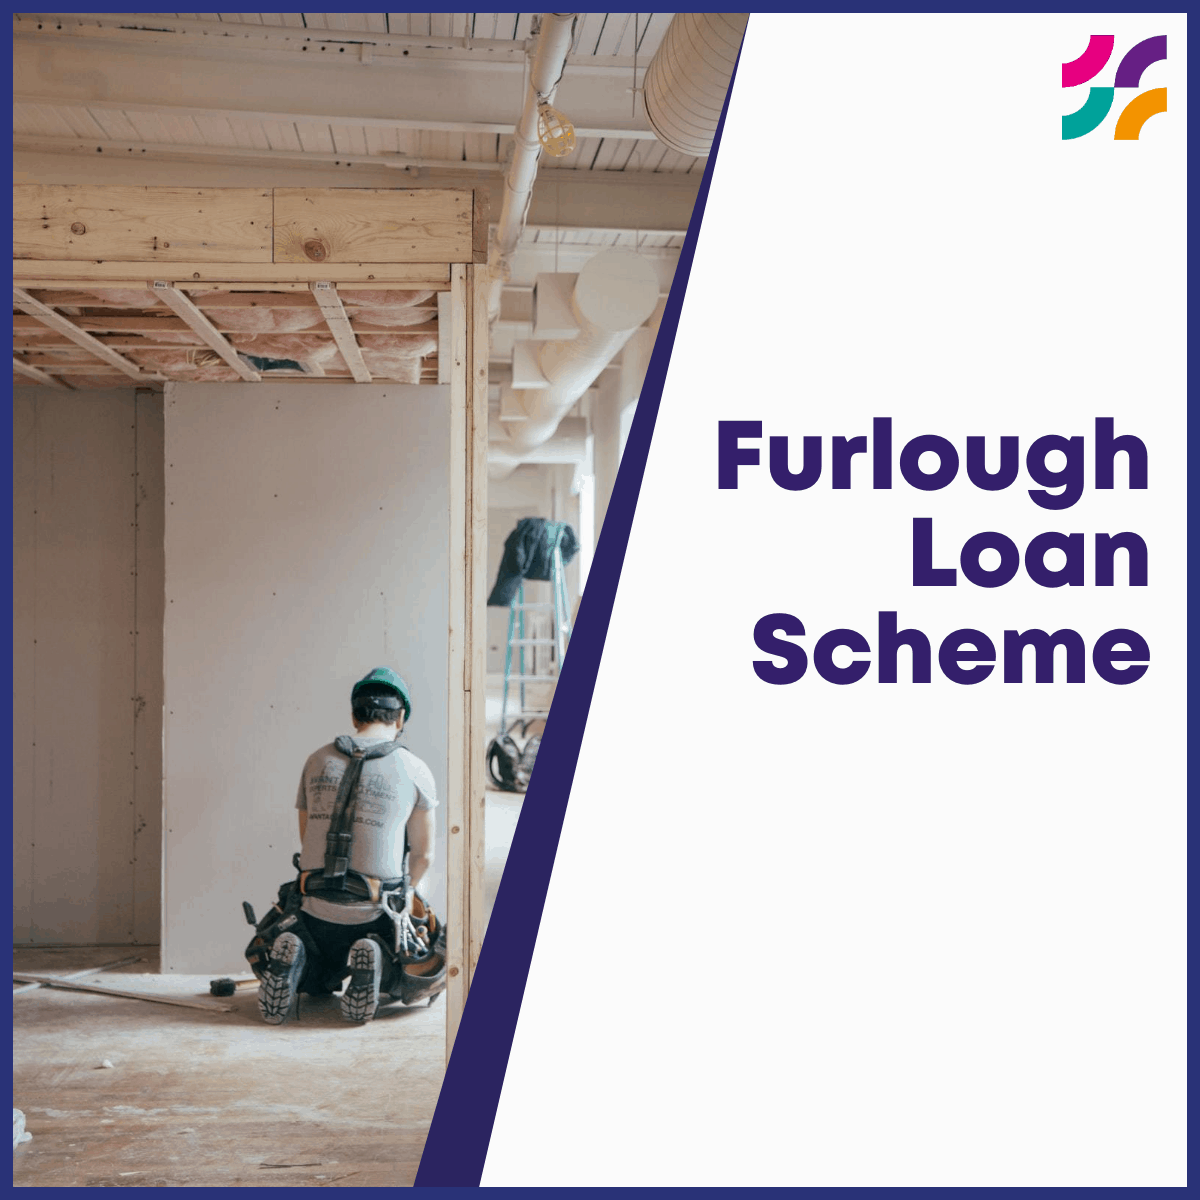 Furlough Loan Scheme